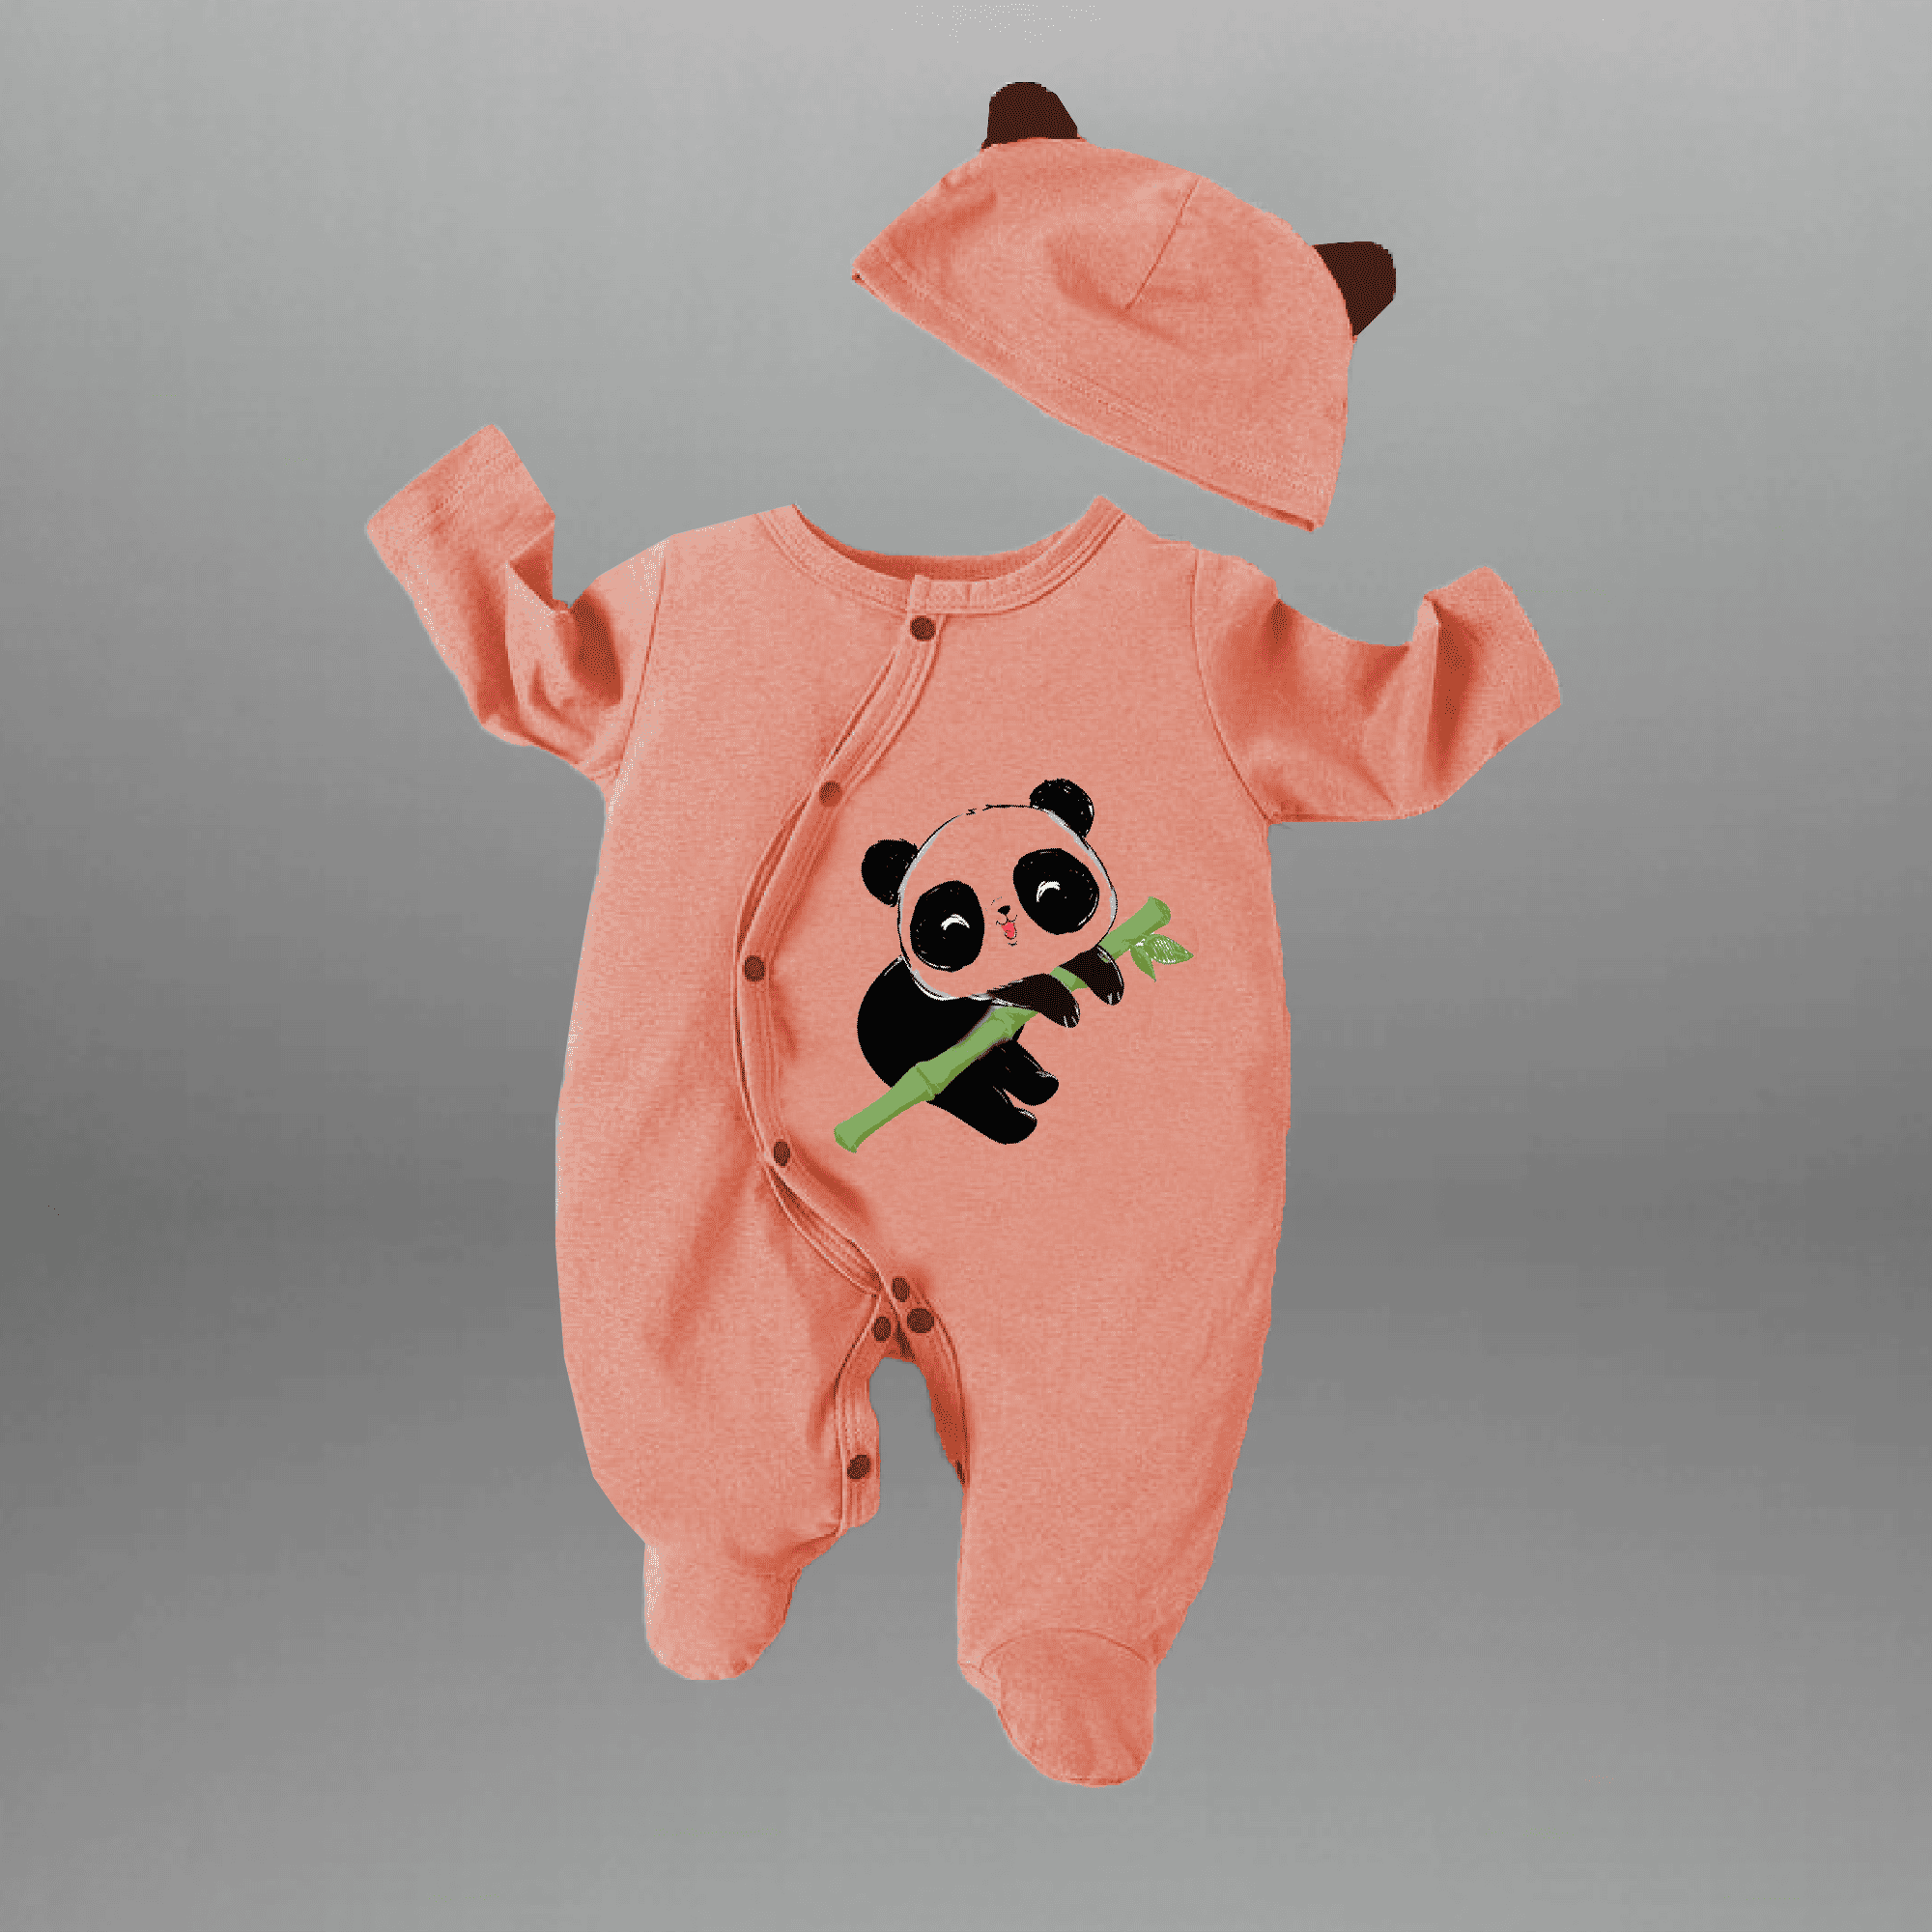 Toddler's Peach Romper with cute lazy panda motif and a free cap-RKFCTT105